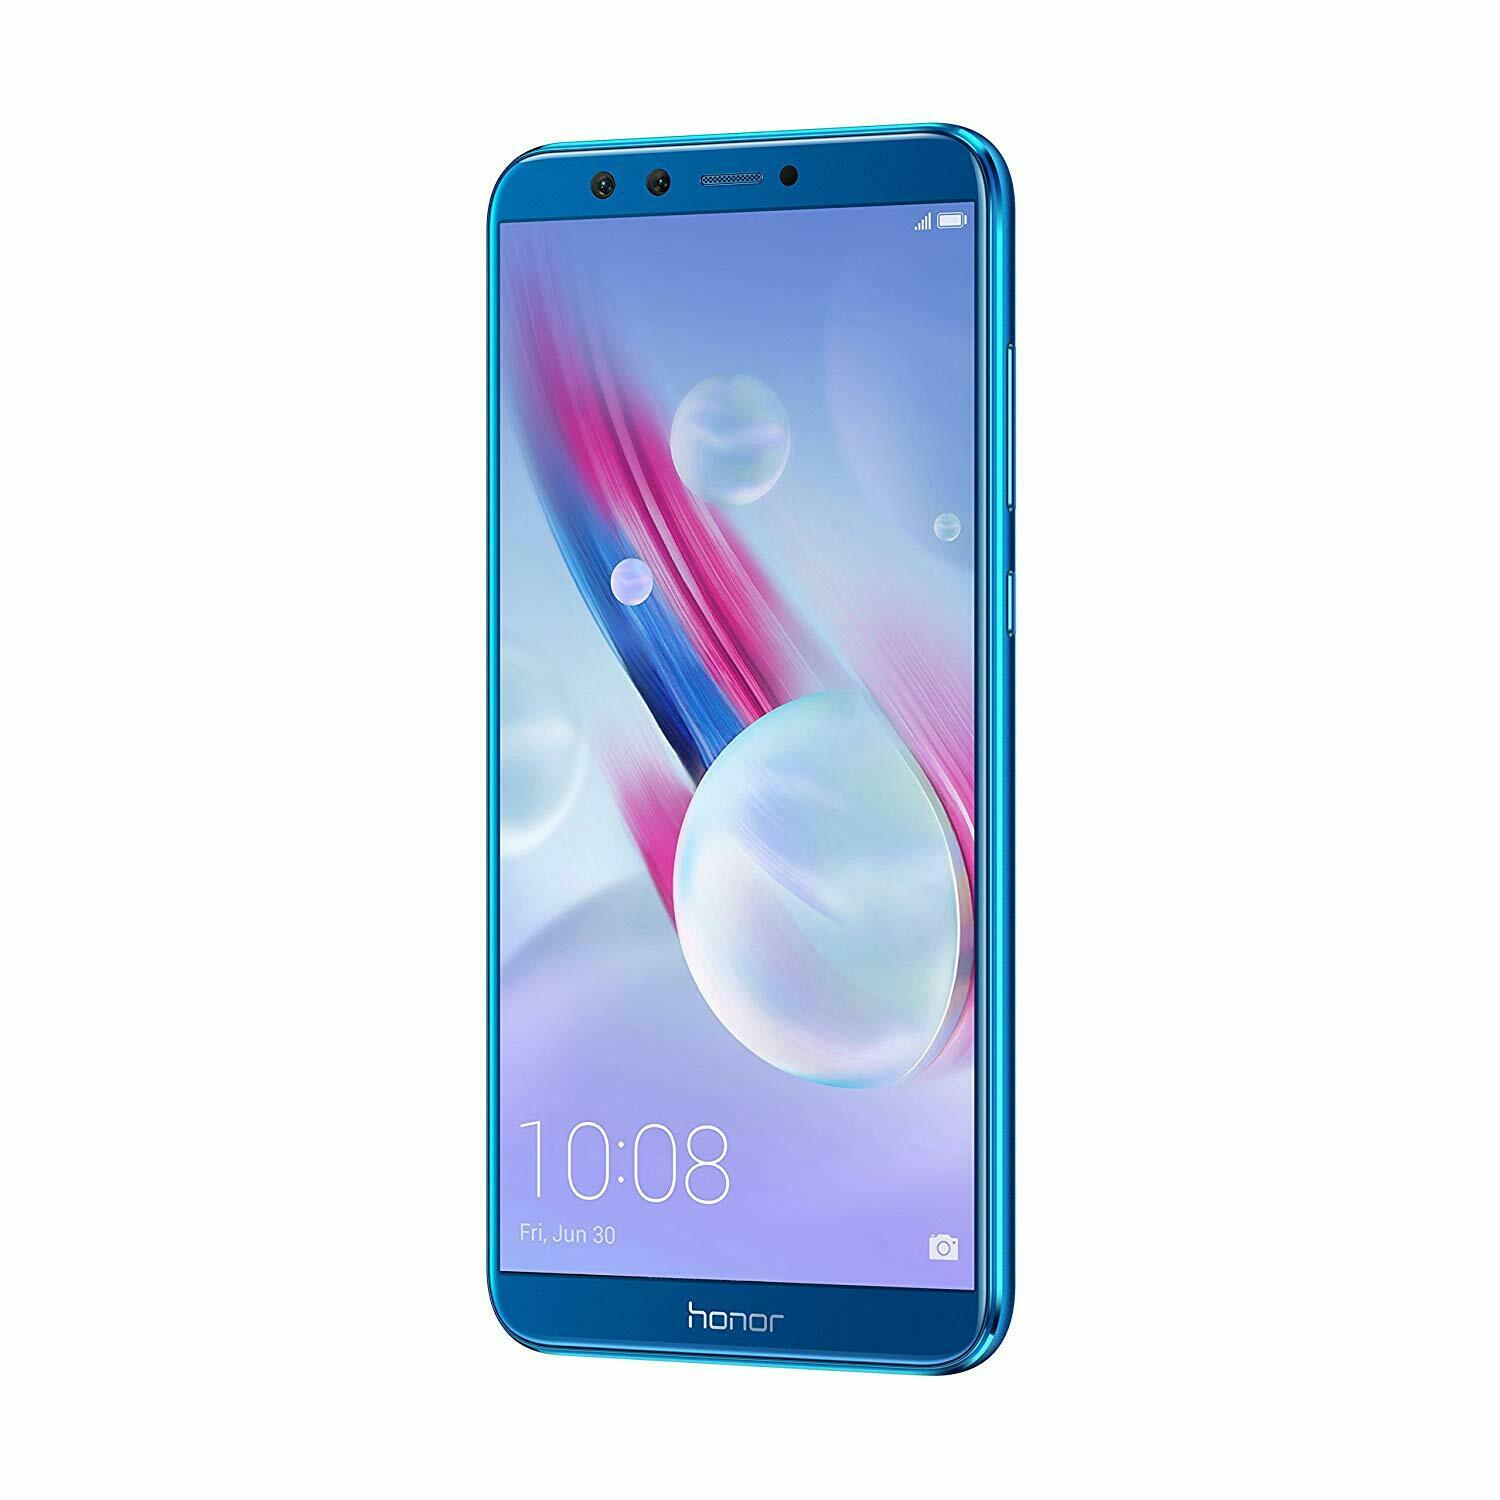 Huawei Honor 9 Lite Smartphone 5.65" Sim-Free Unlocked 32GB Smartphone Blue/Grey